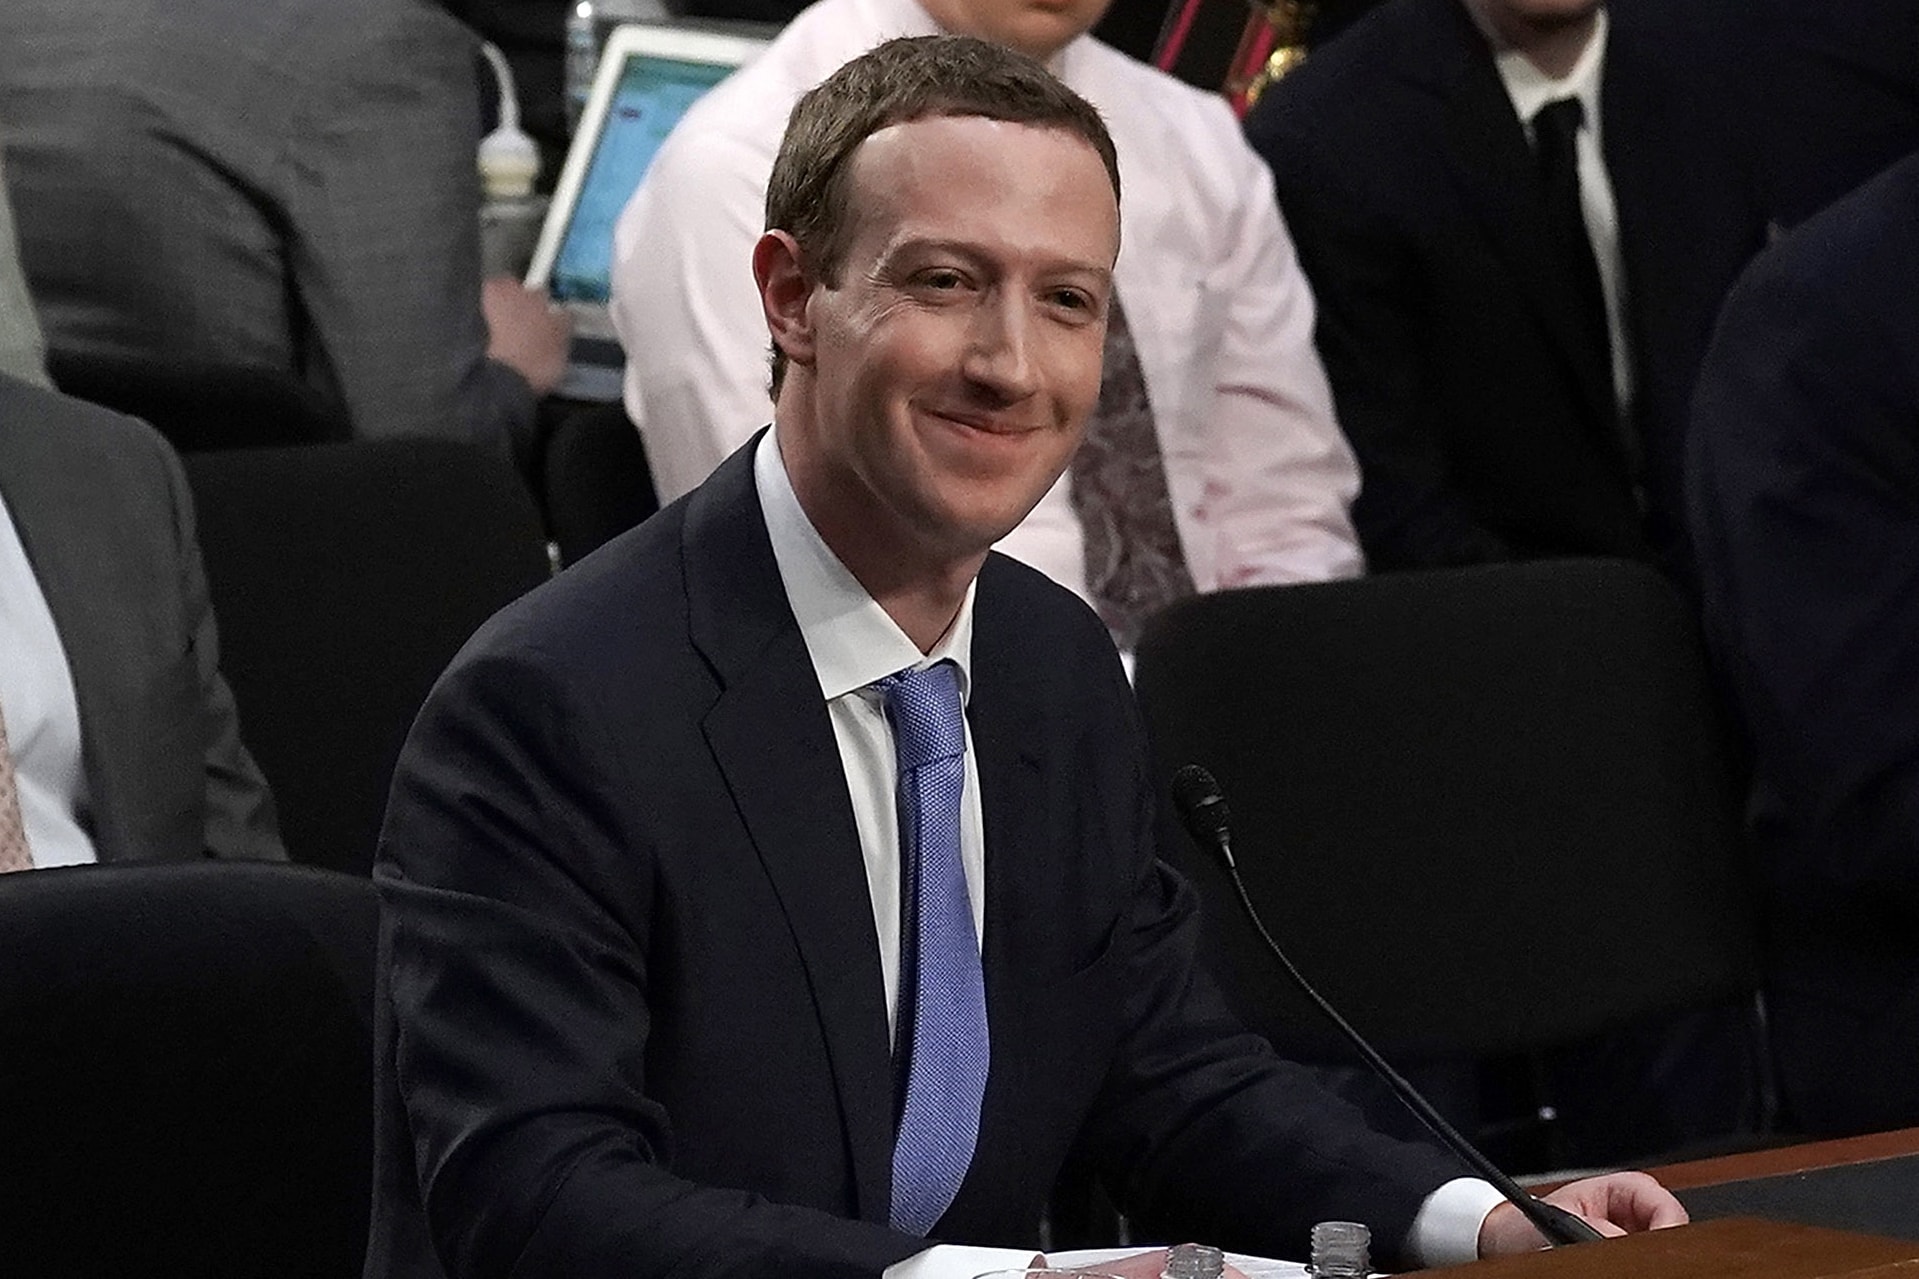 Mark Zuckerberg facebook 3 billion usd richer Cambridge Analytica scandal congress testimony